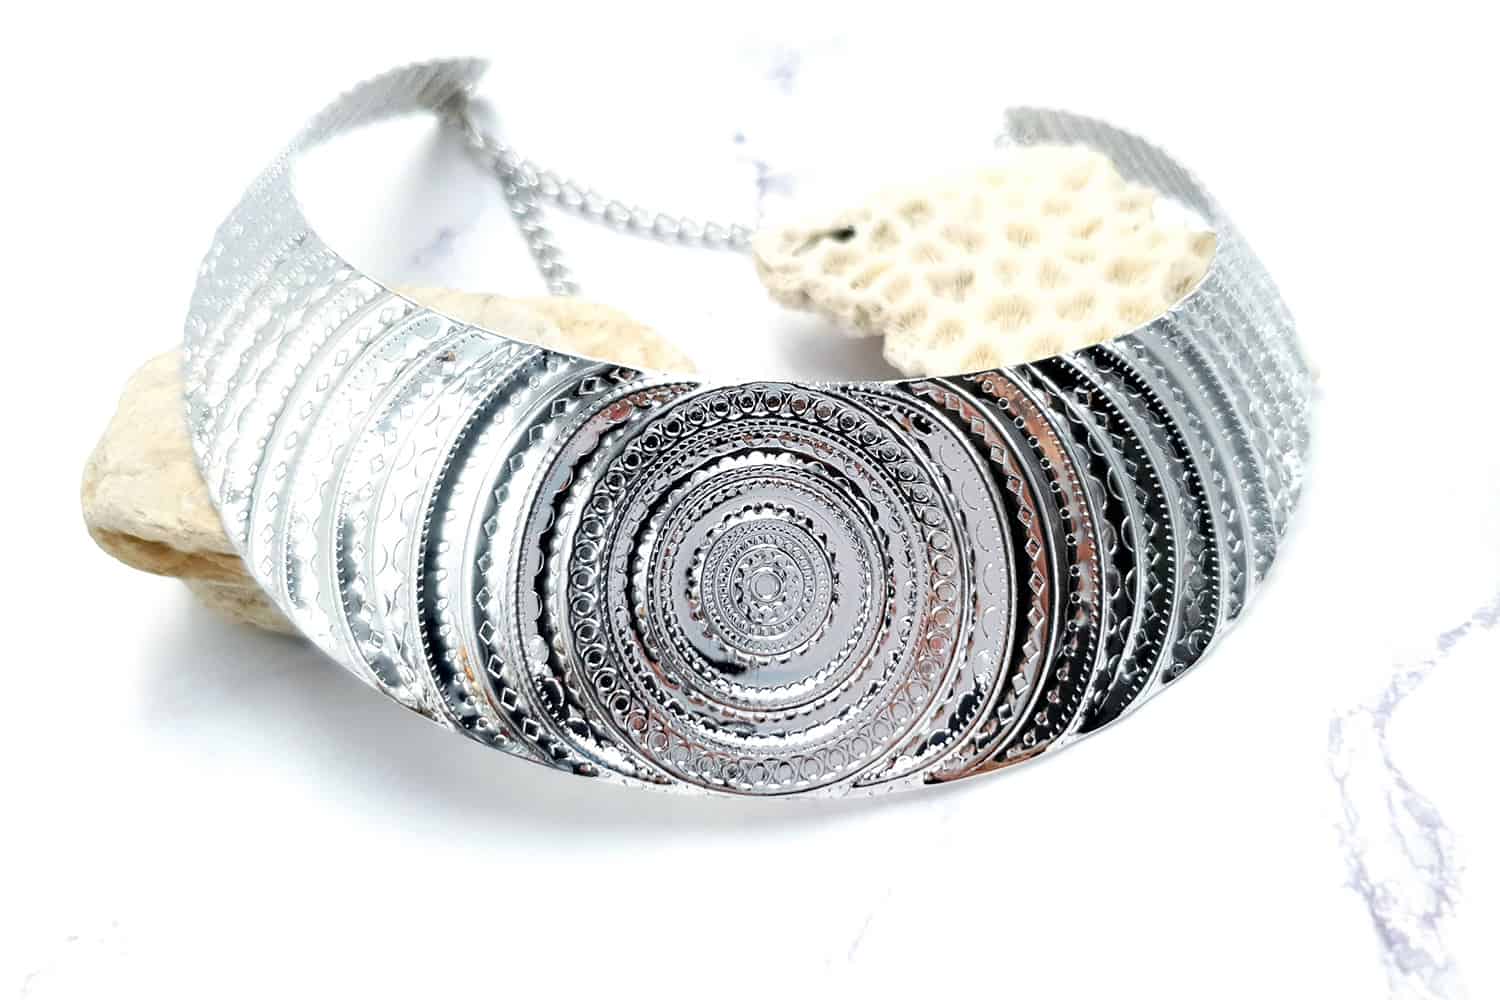 Necklace Metal Base “Circles” Pattern - Silver, 14cm (23368)